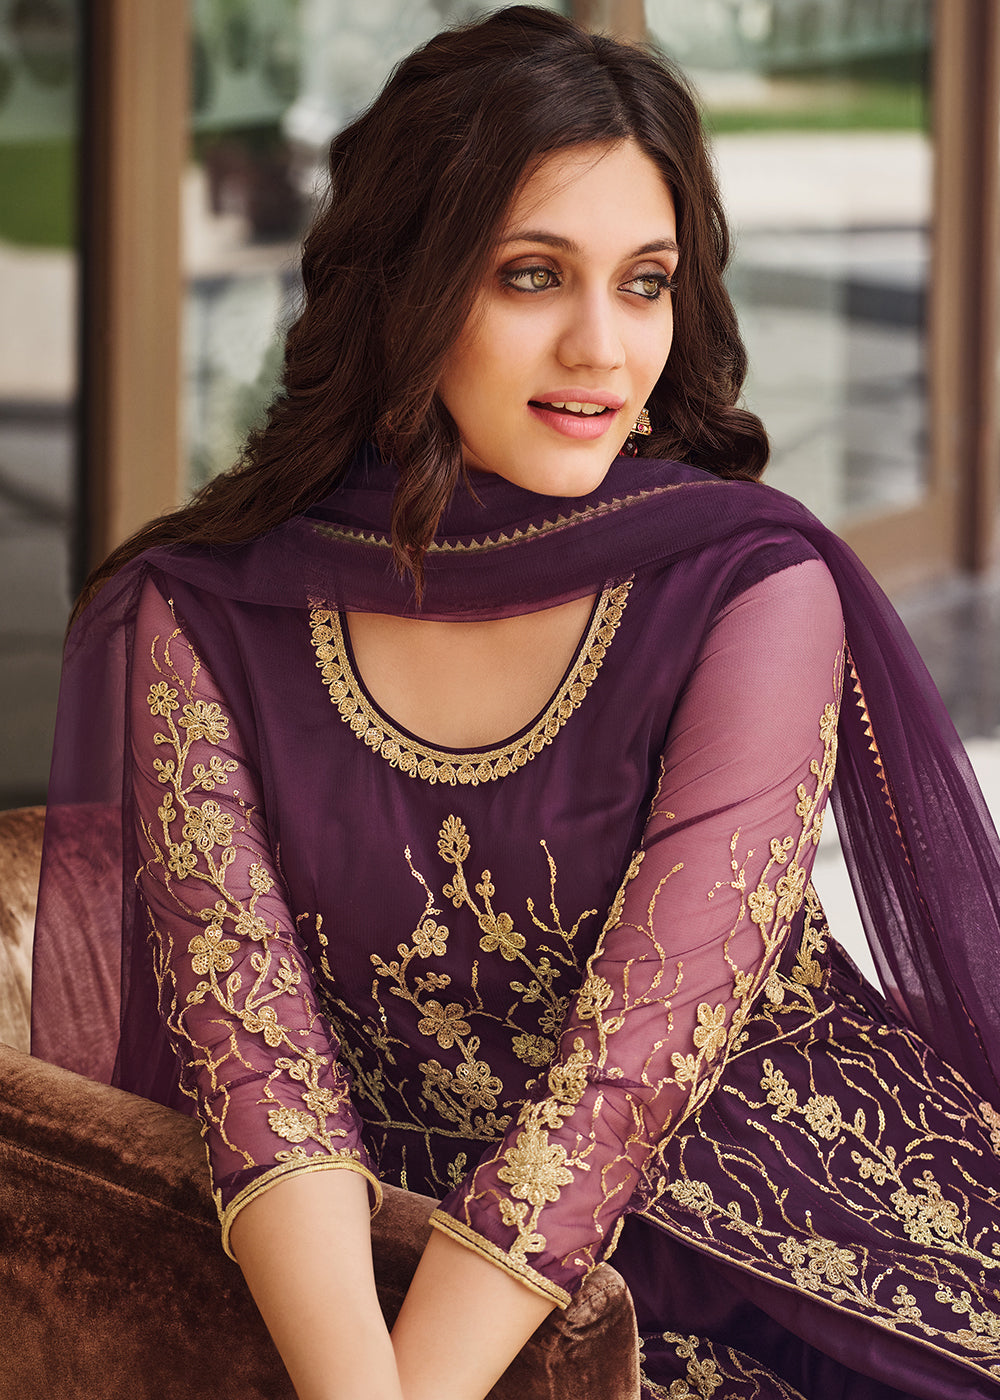 Buy Now Dazzling Wine Purple Designer Front Slit Anarkali Dress Online in USA, UK, Australia, New Zealand, Canada & Worldwide at Empress Clothing. 